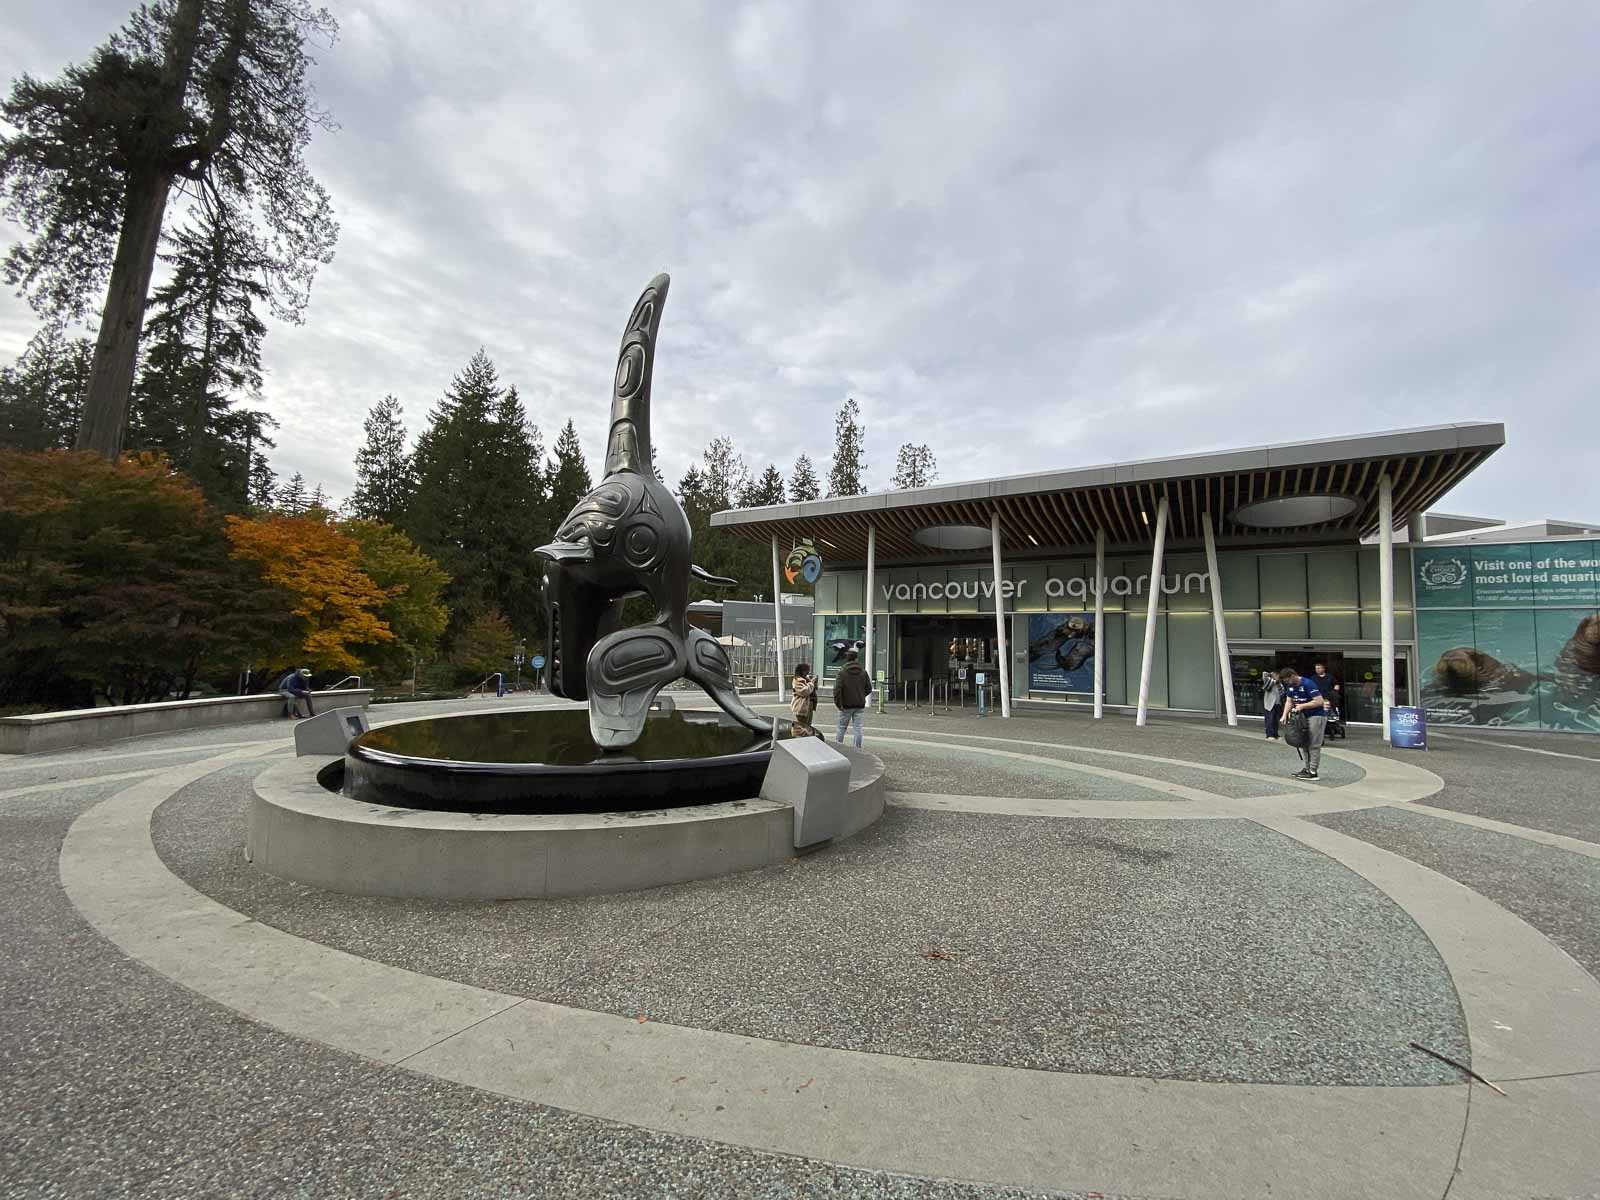 Vancouver Aquarium in Stanley Park Vancouver BC